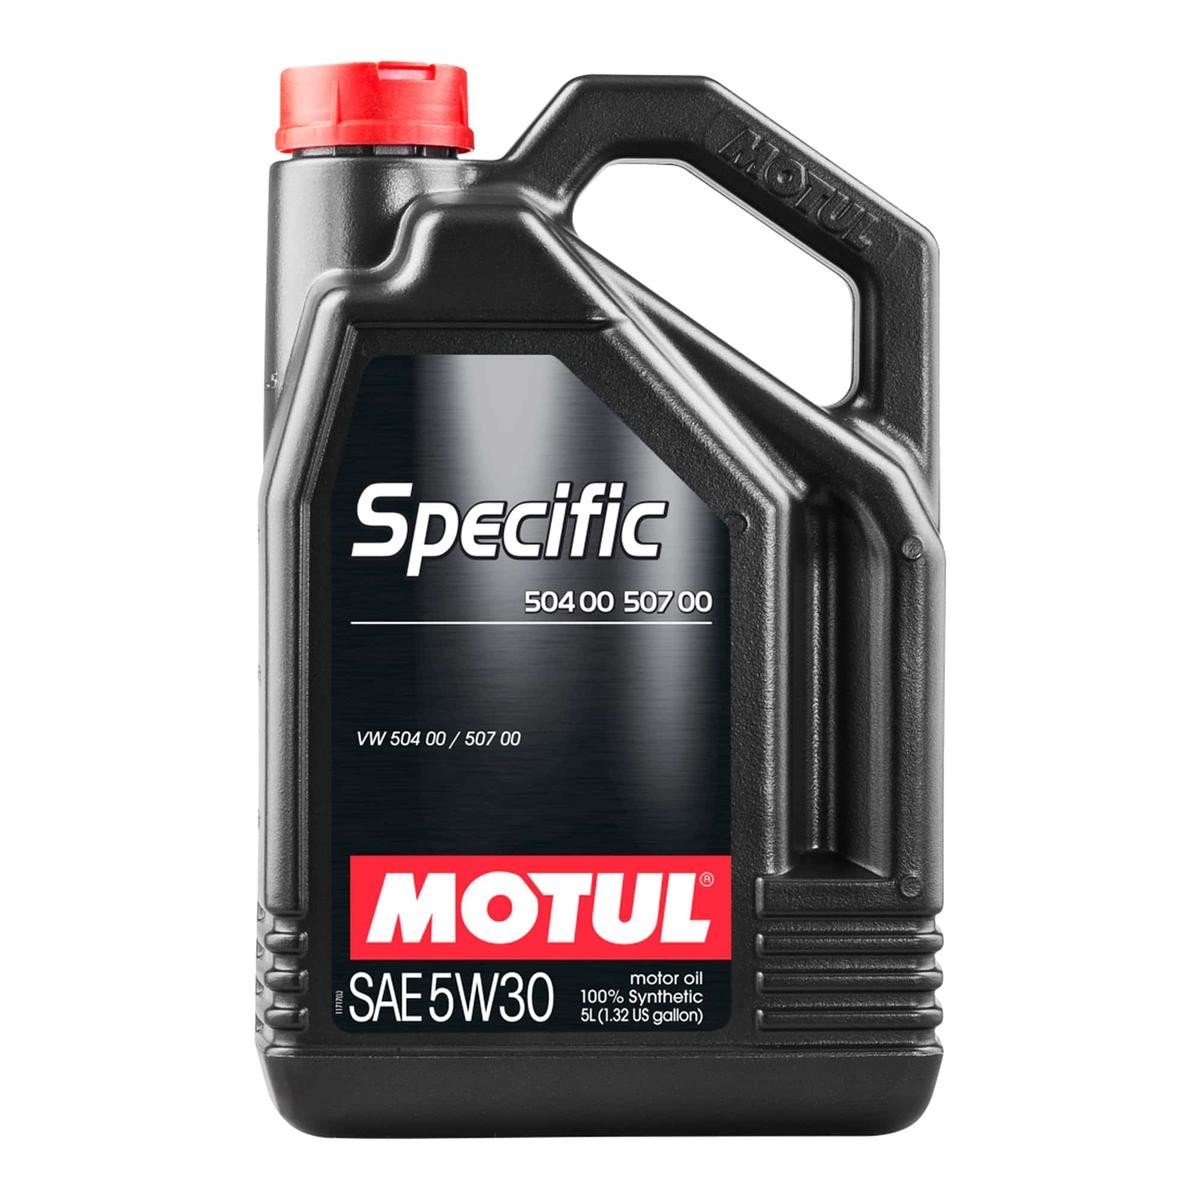 Öl für Motor MOTUL SPEC504507005W30 Erfahrung